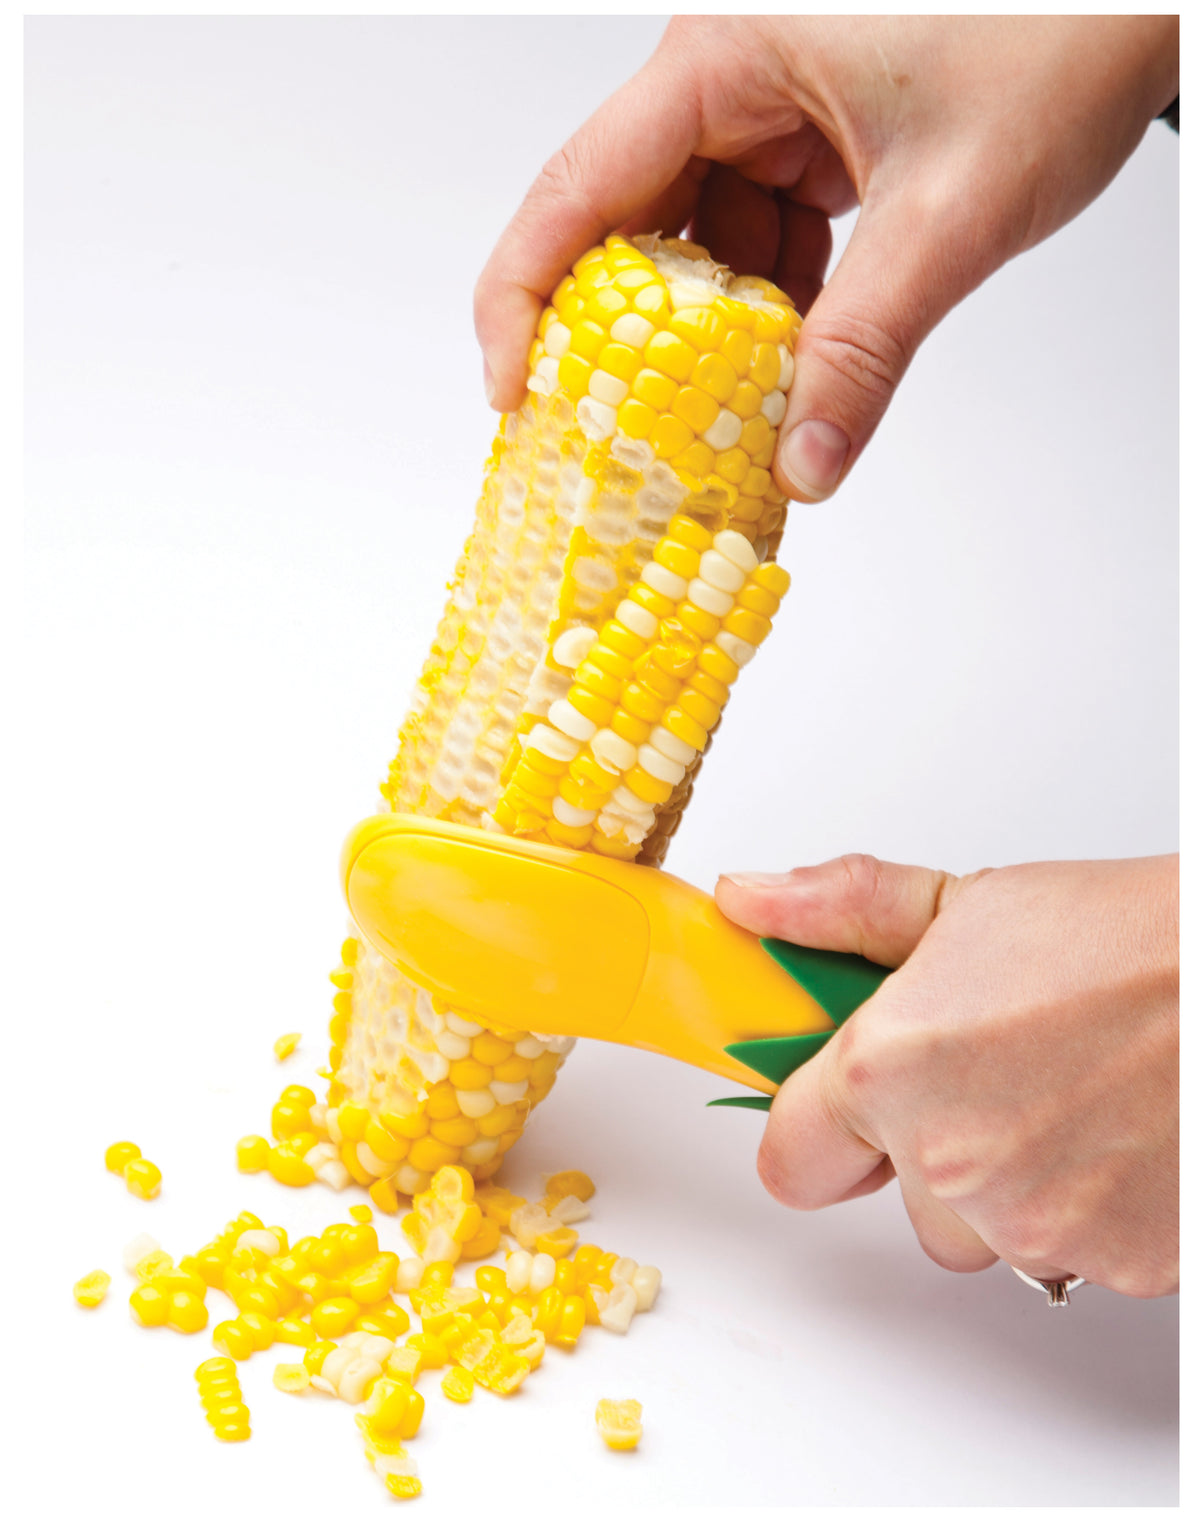 Joie MSC 22944 Corn Star Corn Stripper, Plastic/Stainless Steel